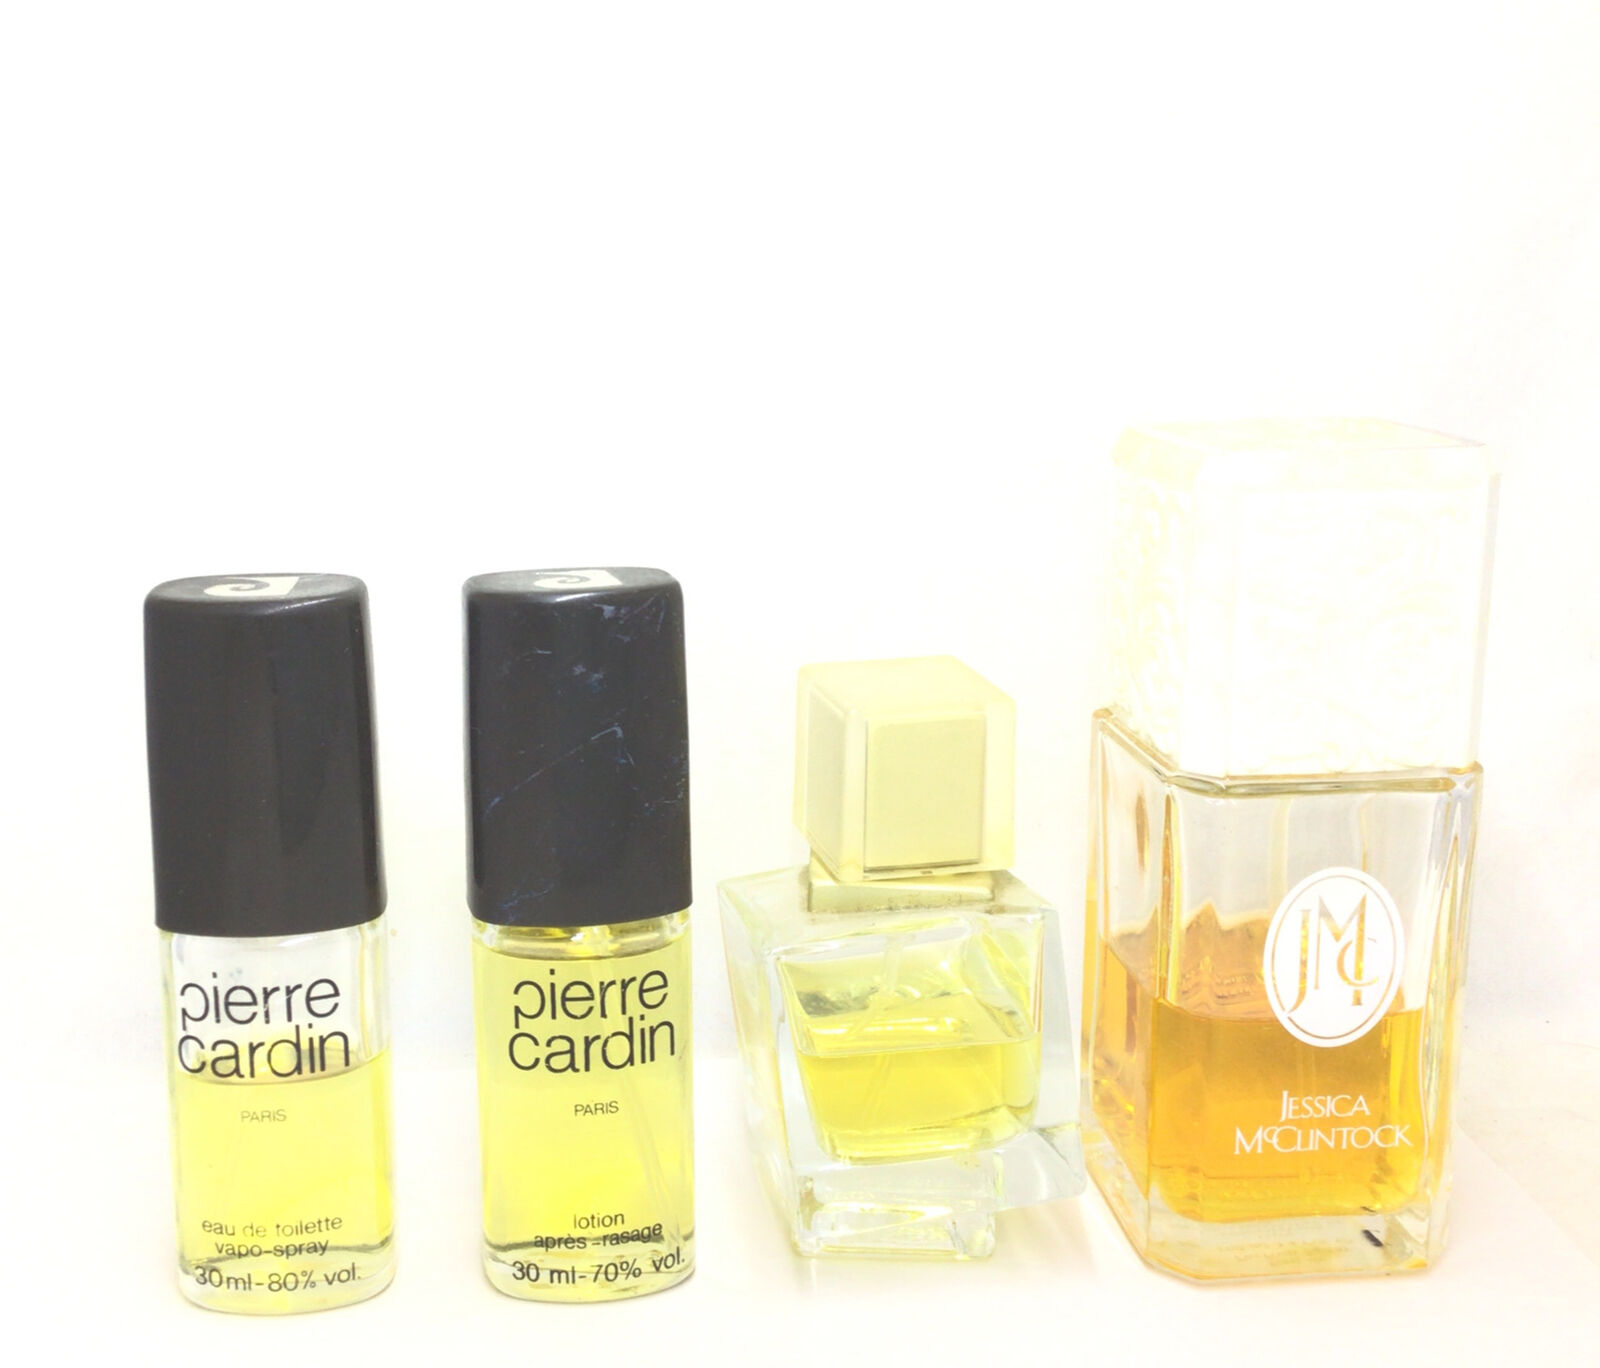 LOT of 4pcs Perfumes Pierre Cardin, Jessica Mcclintock, V'e Versace EDP